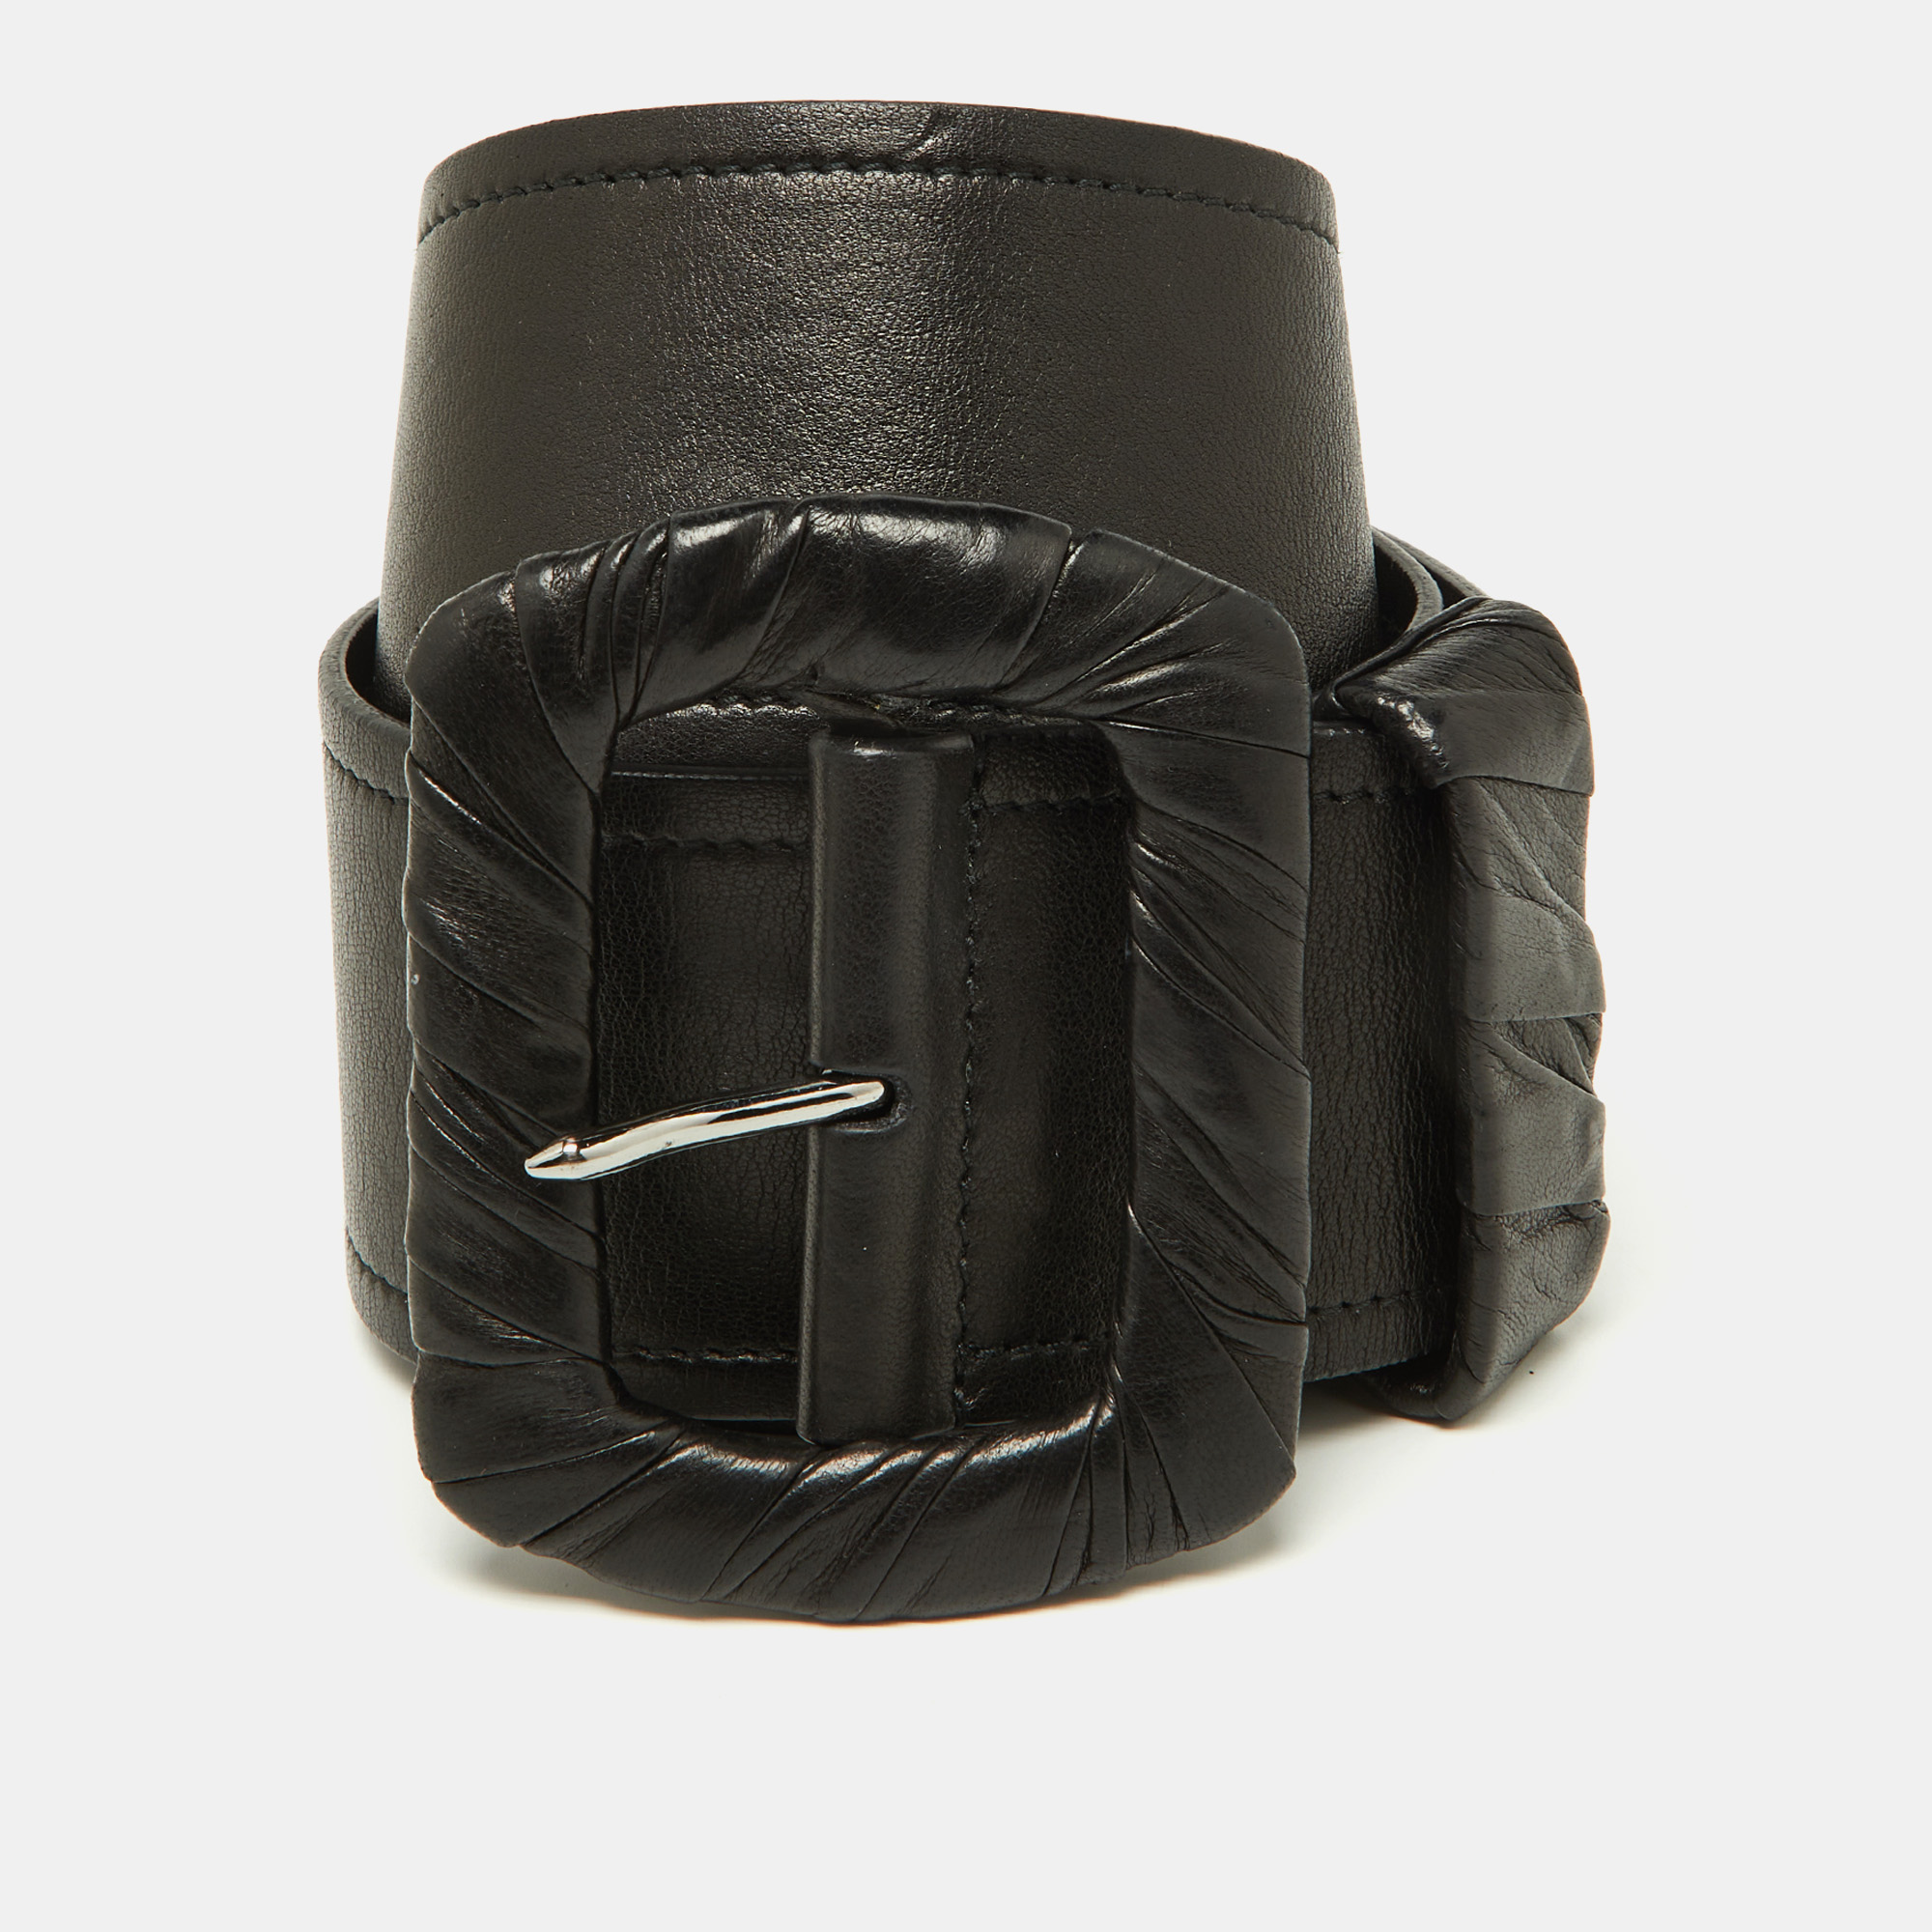 Prada black leather wide waist belt 80cm